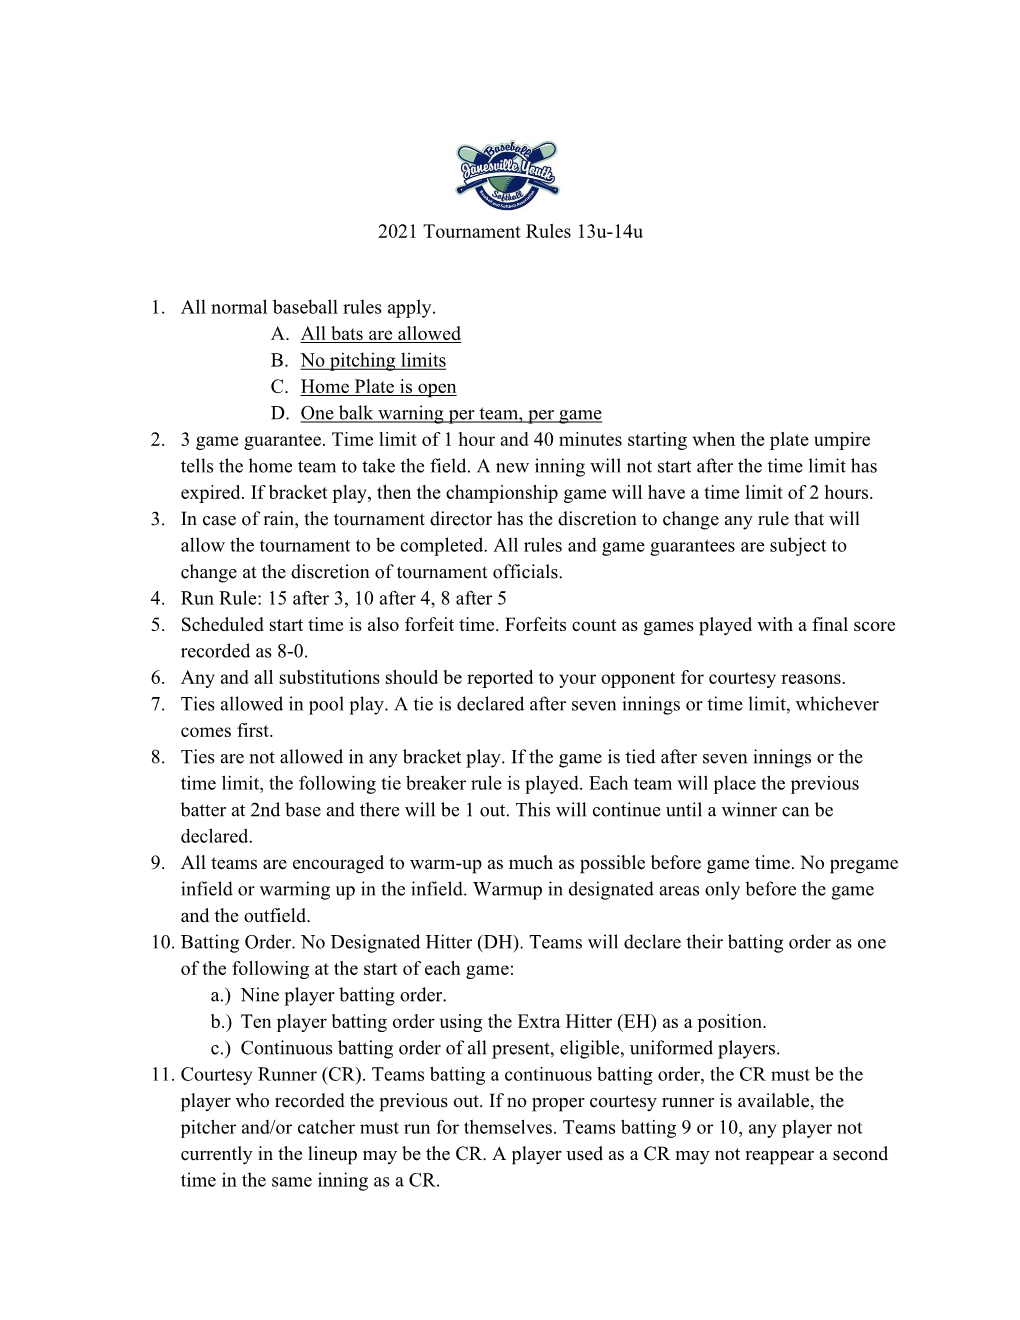 2021 Tournament Rules 13U-14U 1. All Normal Baseball Rules Apply. A